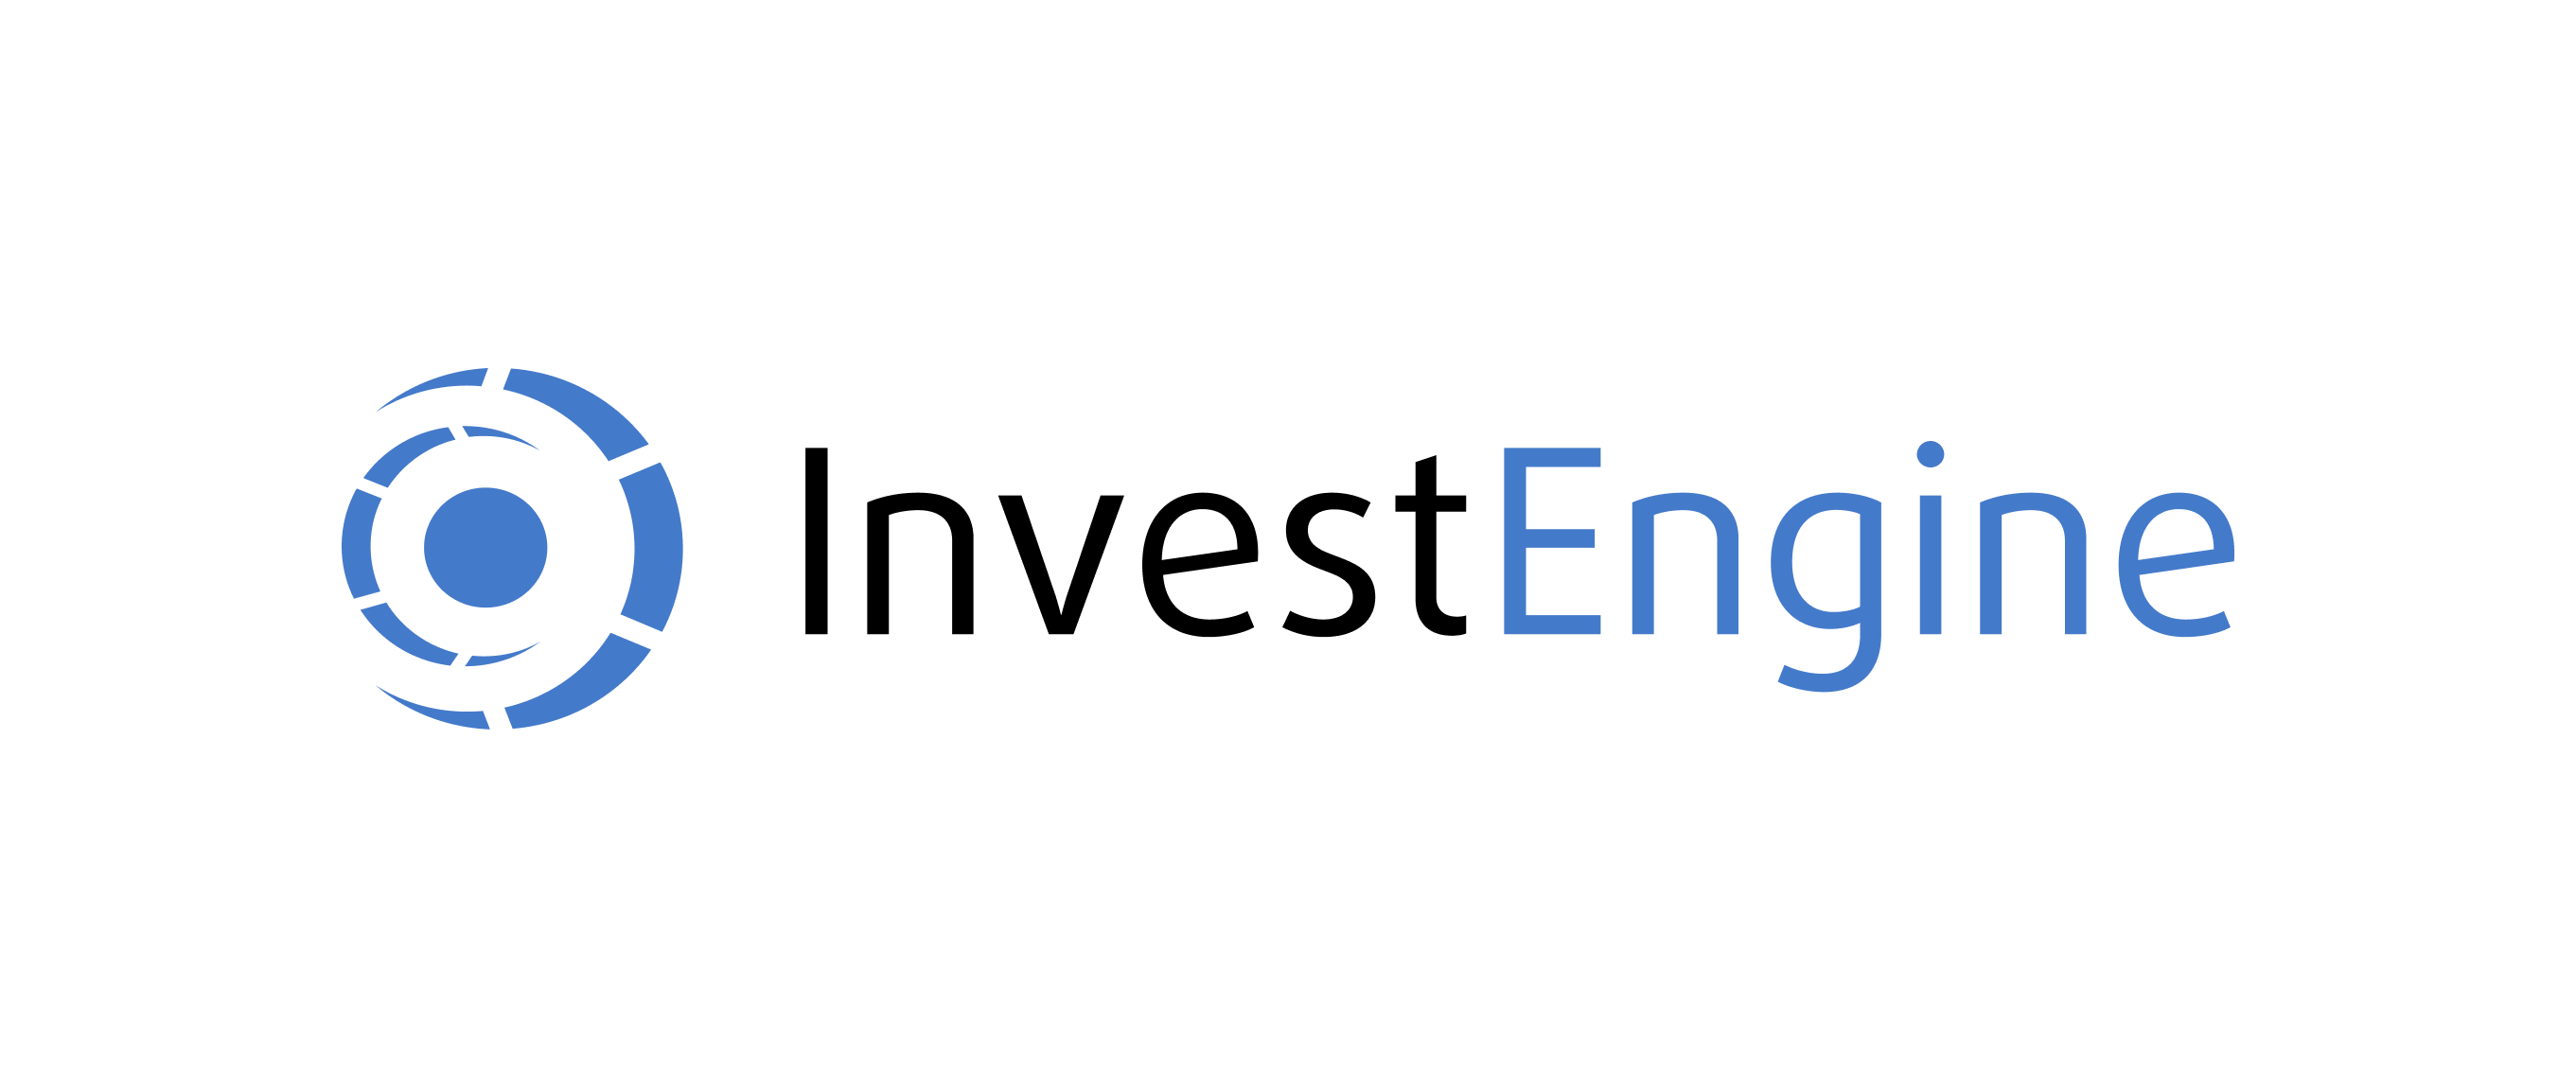 Logo for InvestEngine